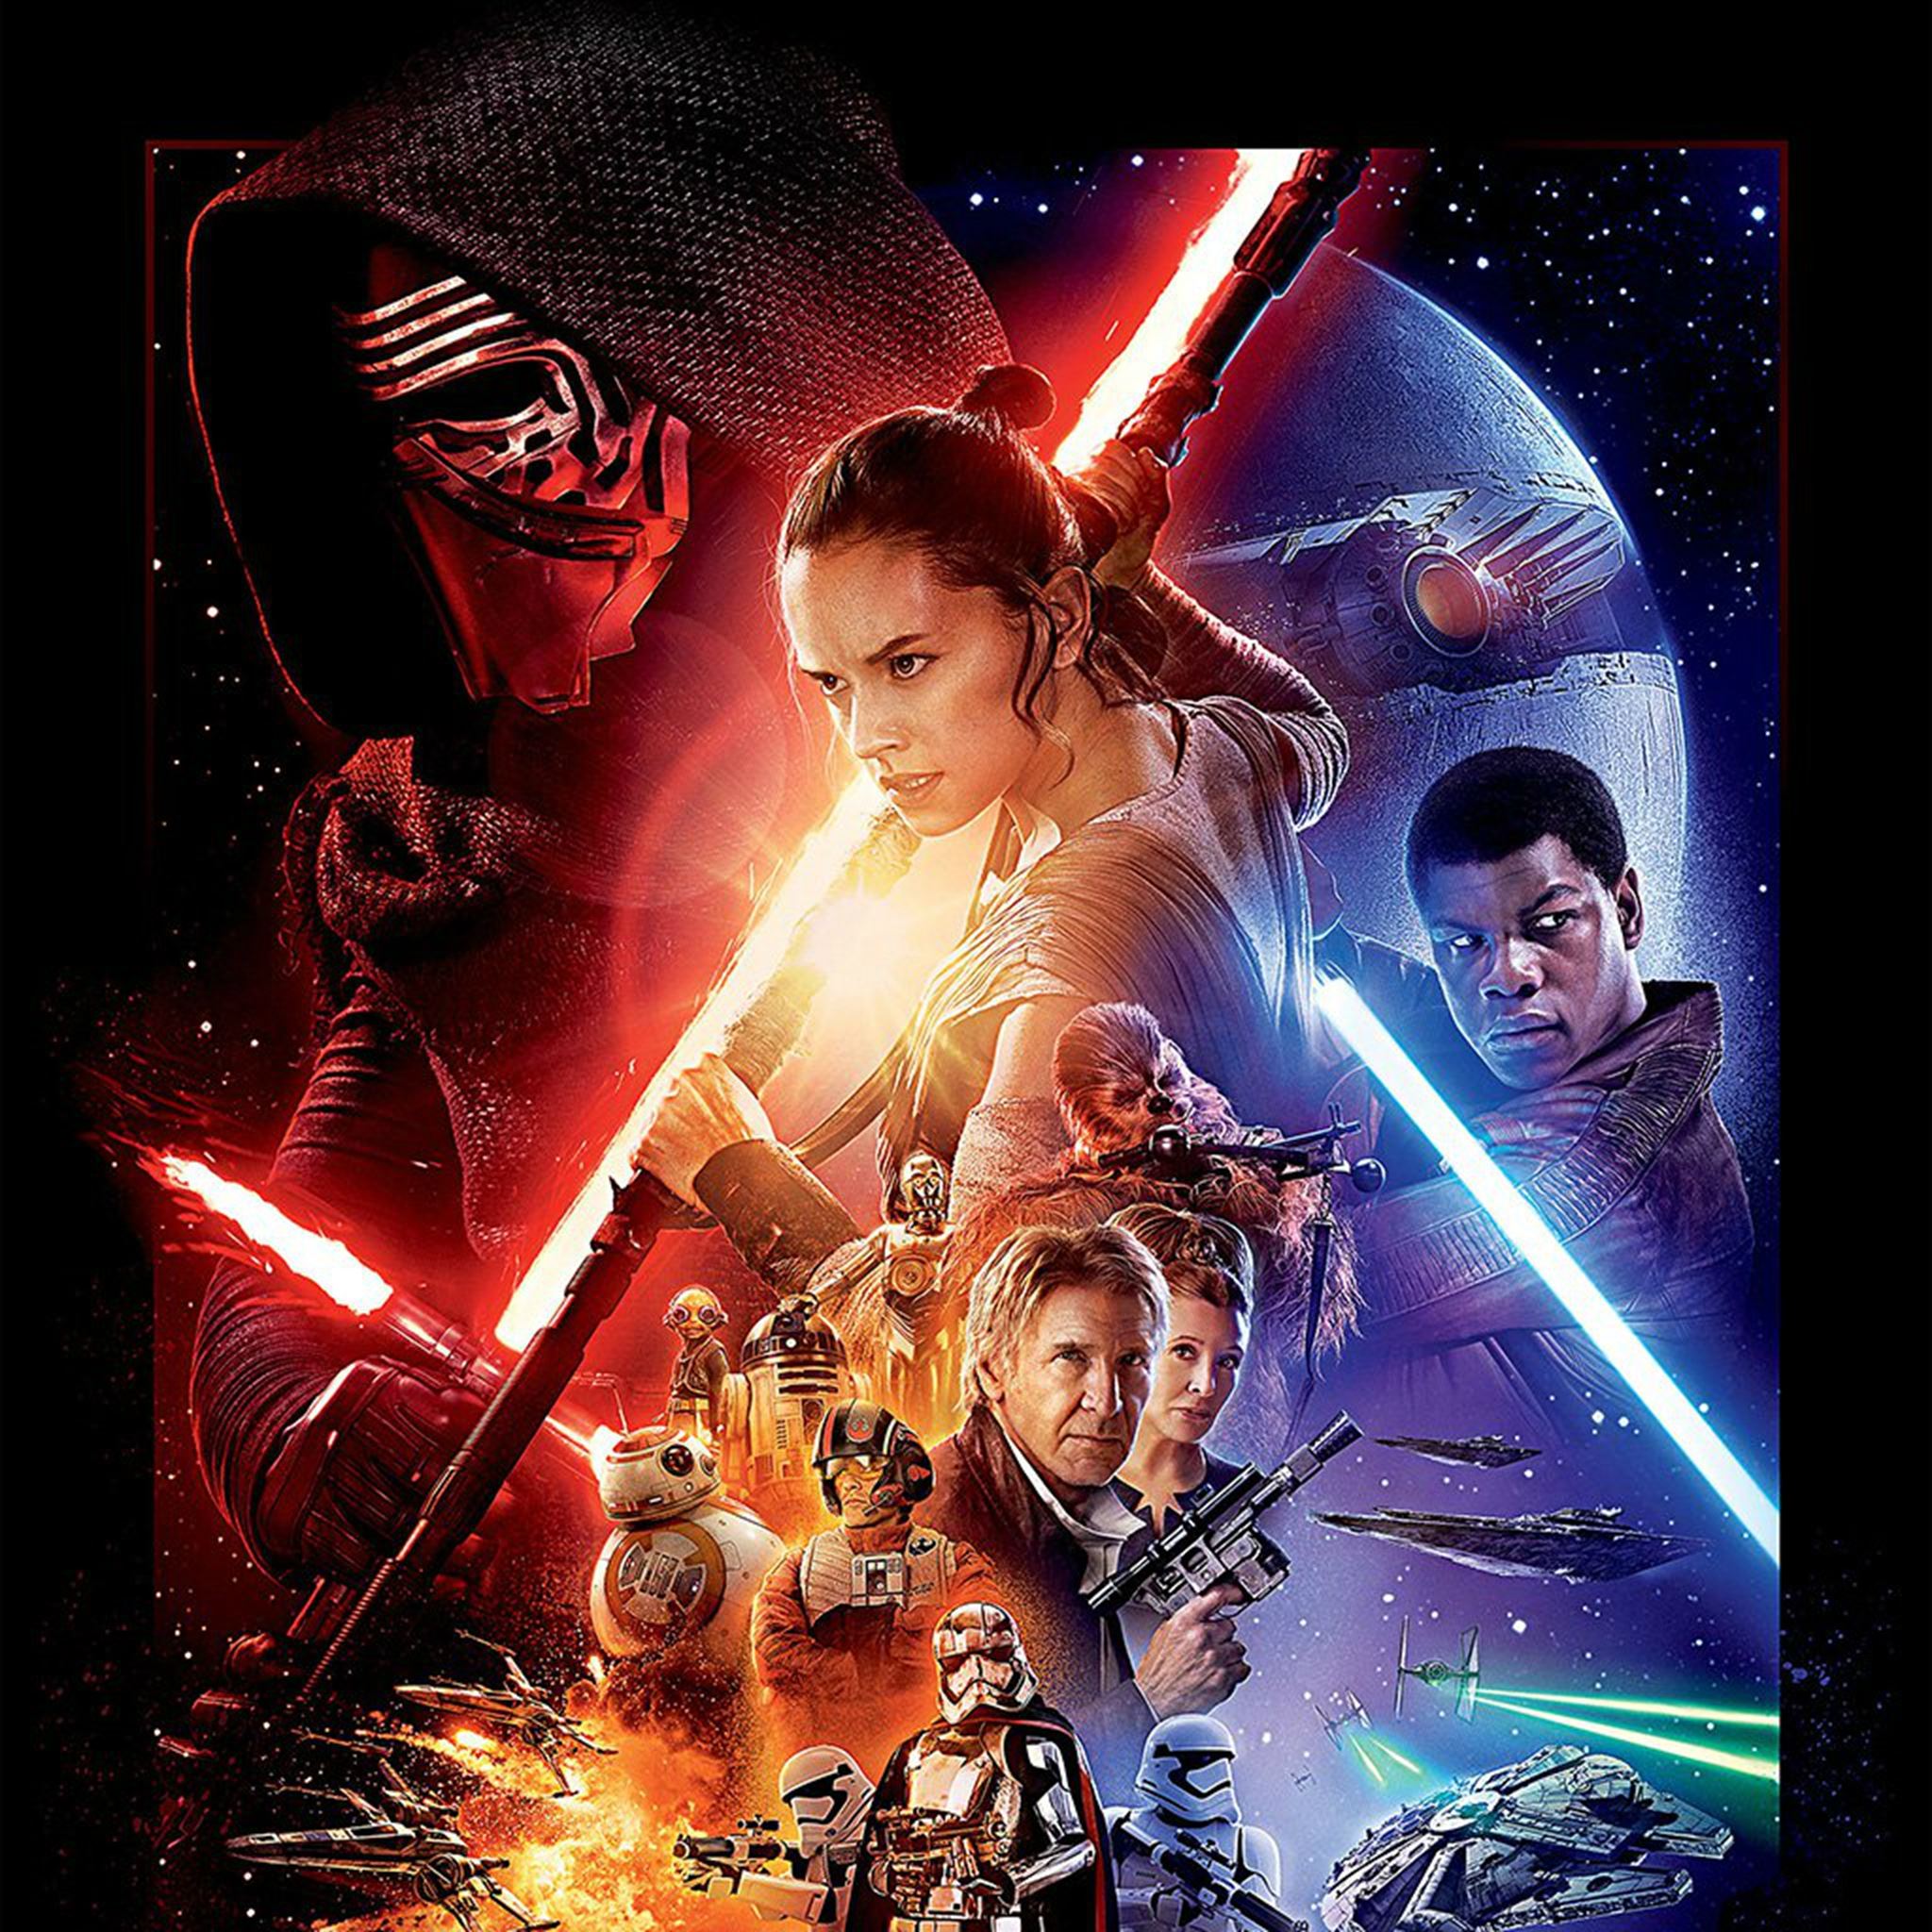 Starwars The Force Awakens Film Poster Art iPad Air Wallpaper Free Download